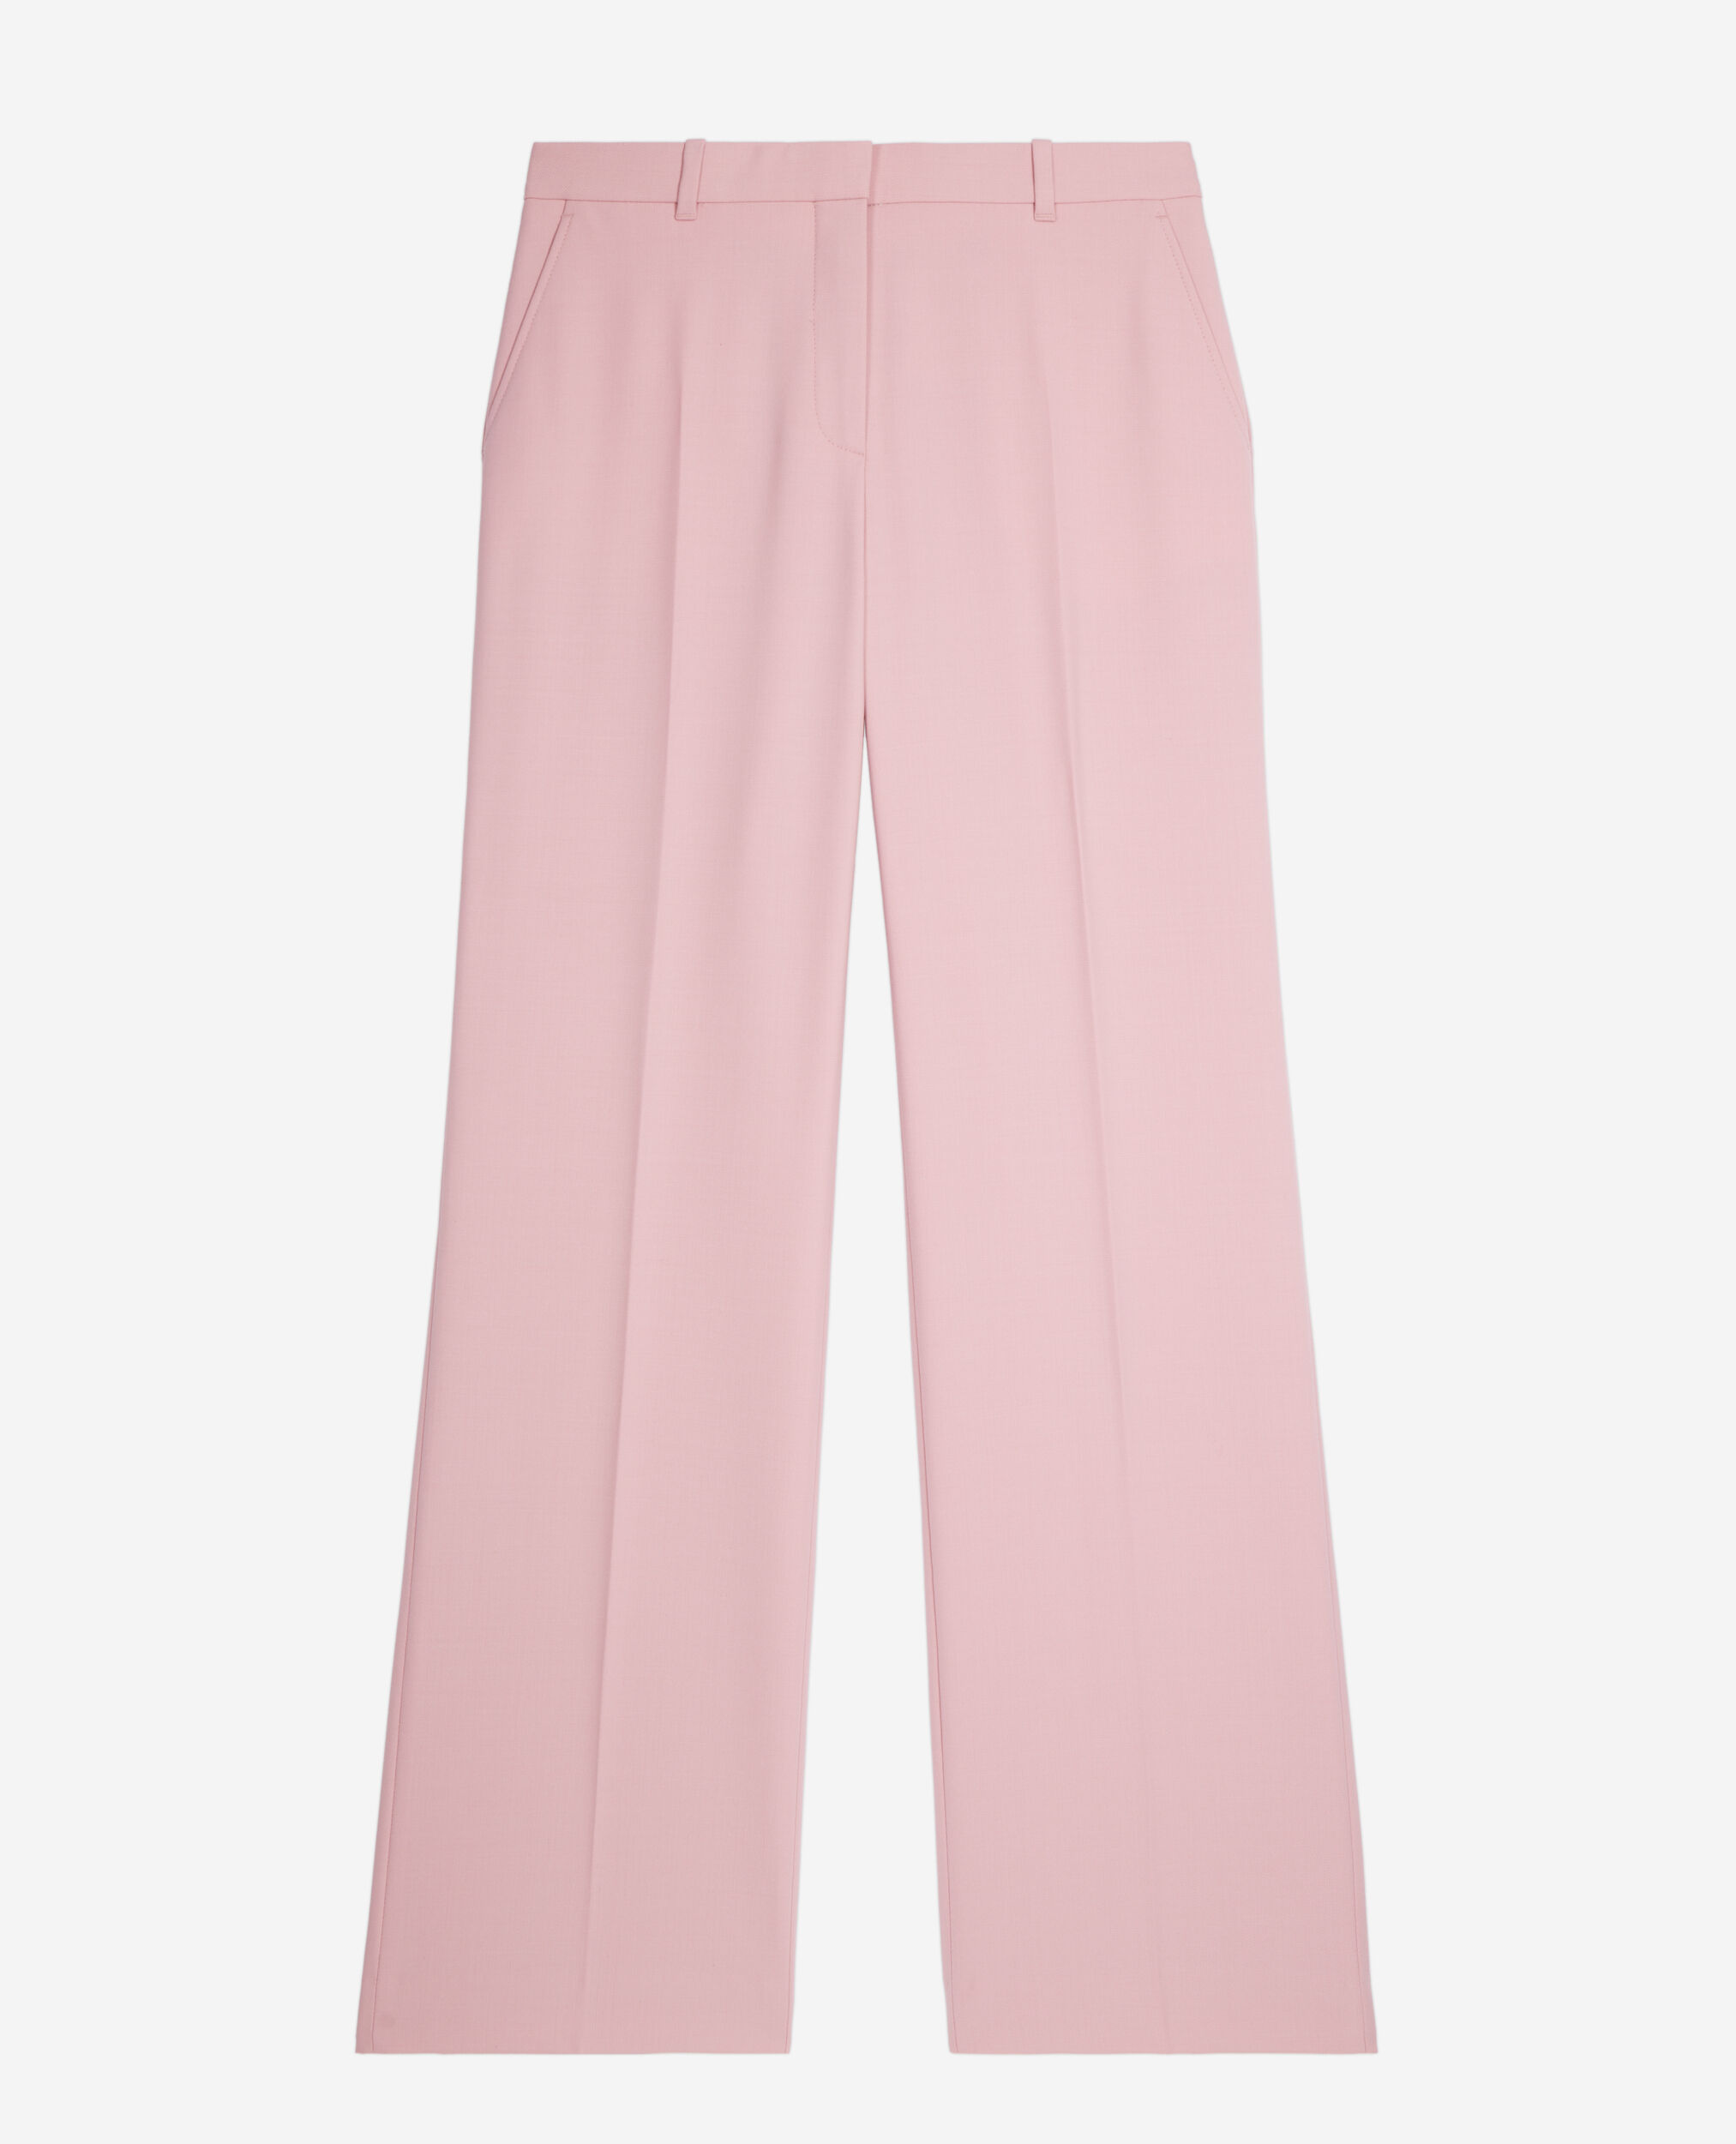 Pantalón traje rosa mezcla lana, PASTEL PINK, hi-res image number null